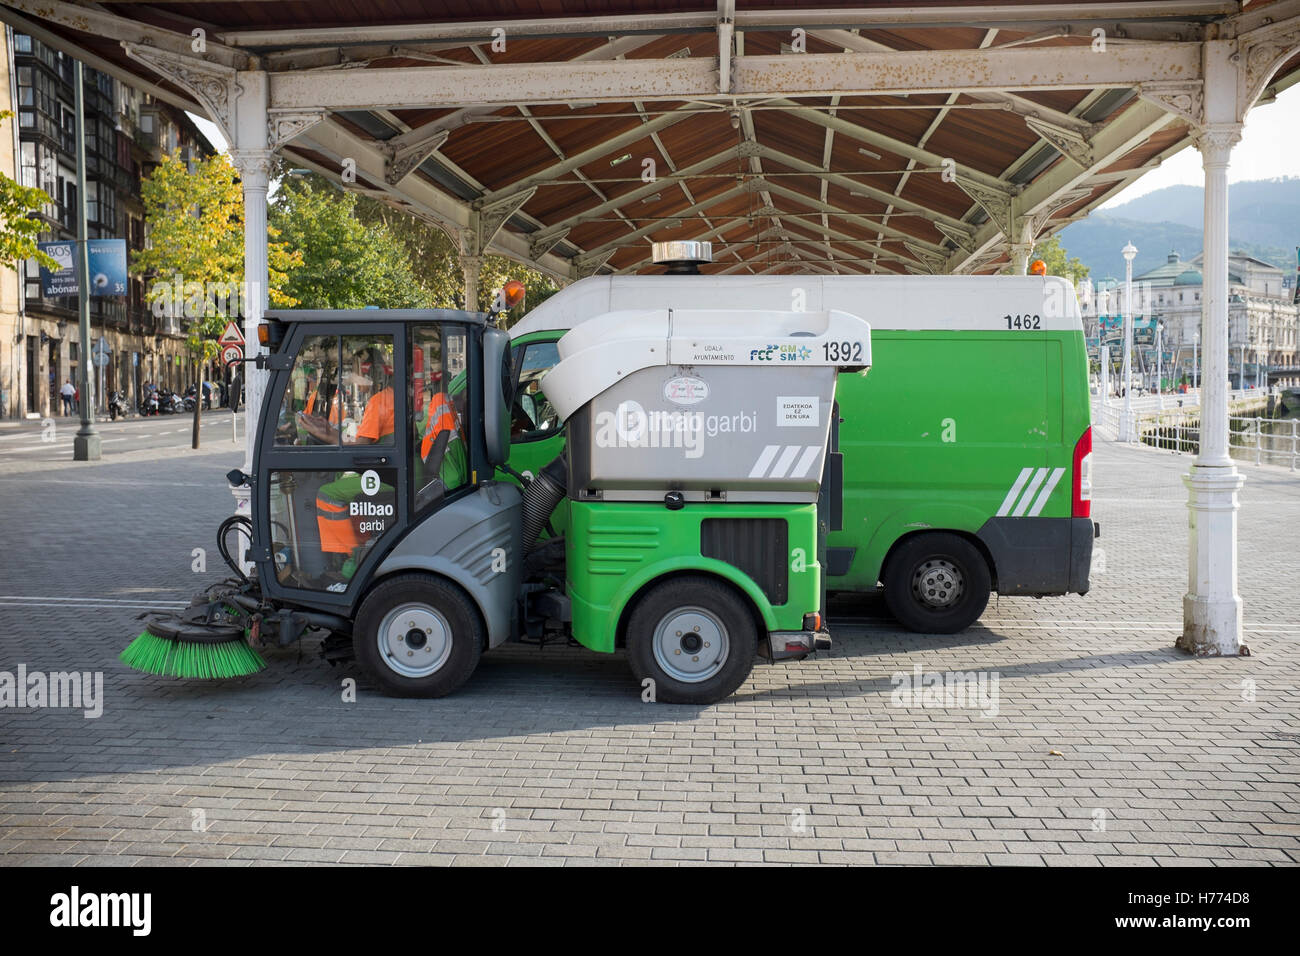 Bilbao Garbi Waste Collection or Garbage Truck Stock Photo